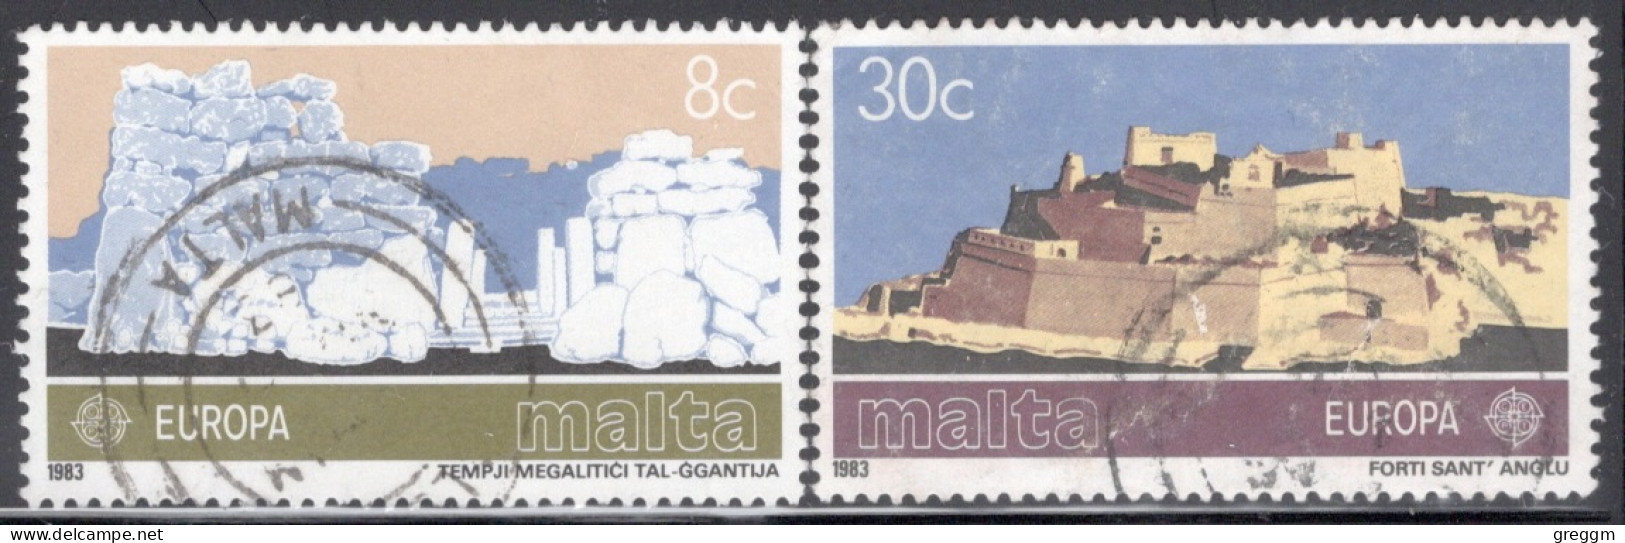 Malta 1983 Set To Celebrate  EUROPA Stamps - Inventions In Fine Used - Malta